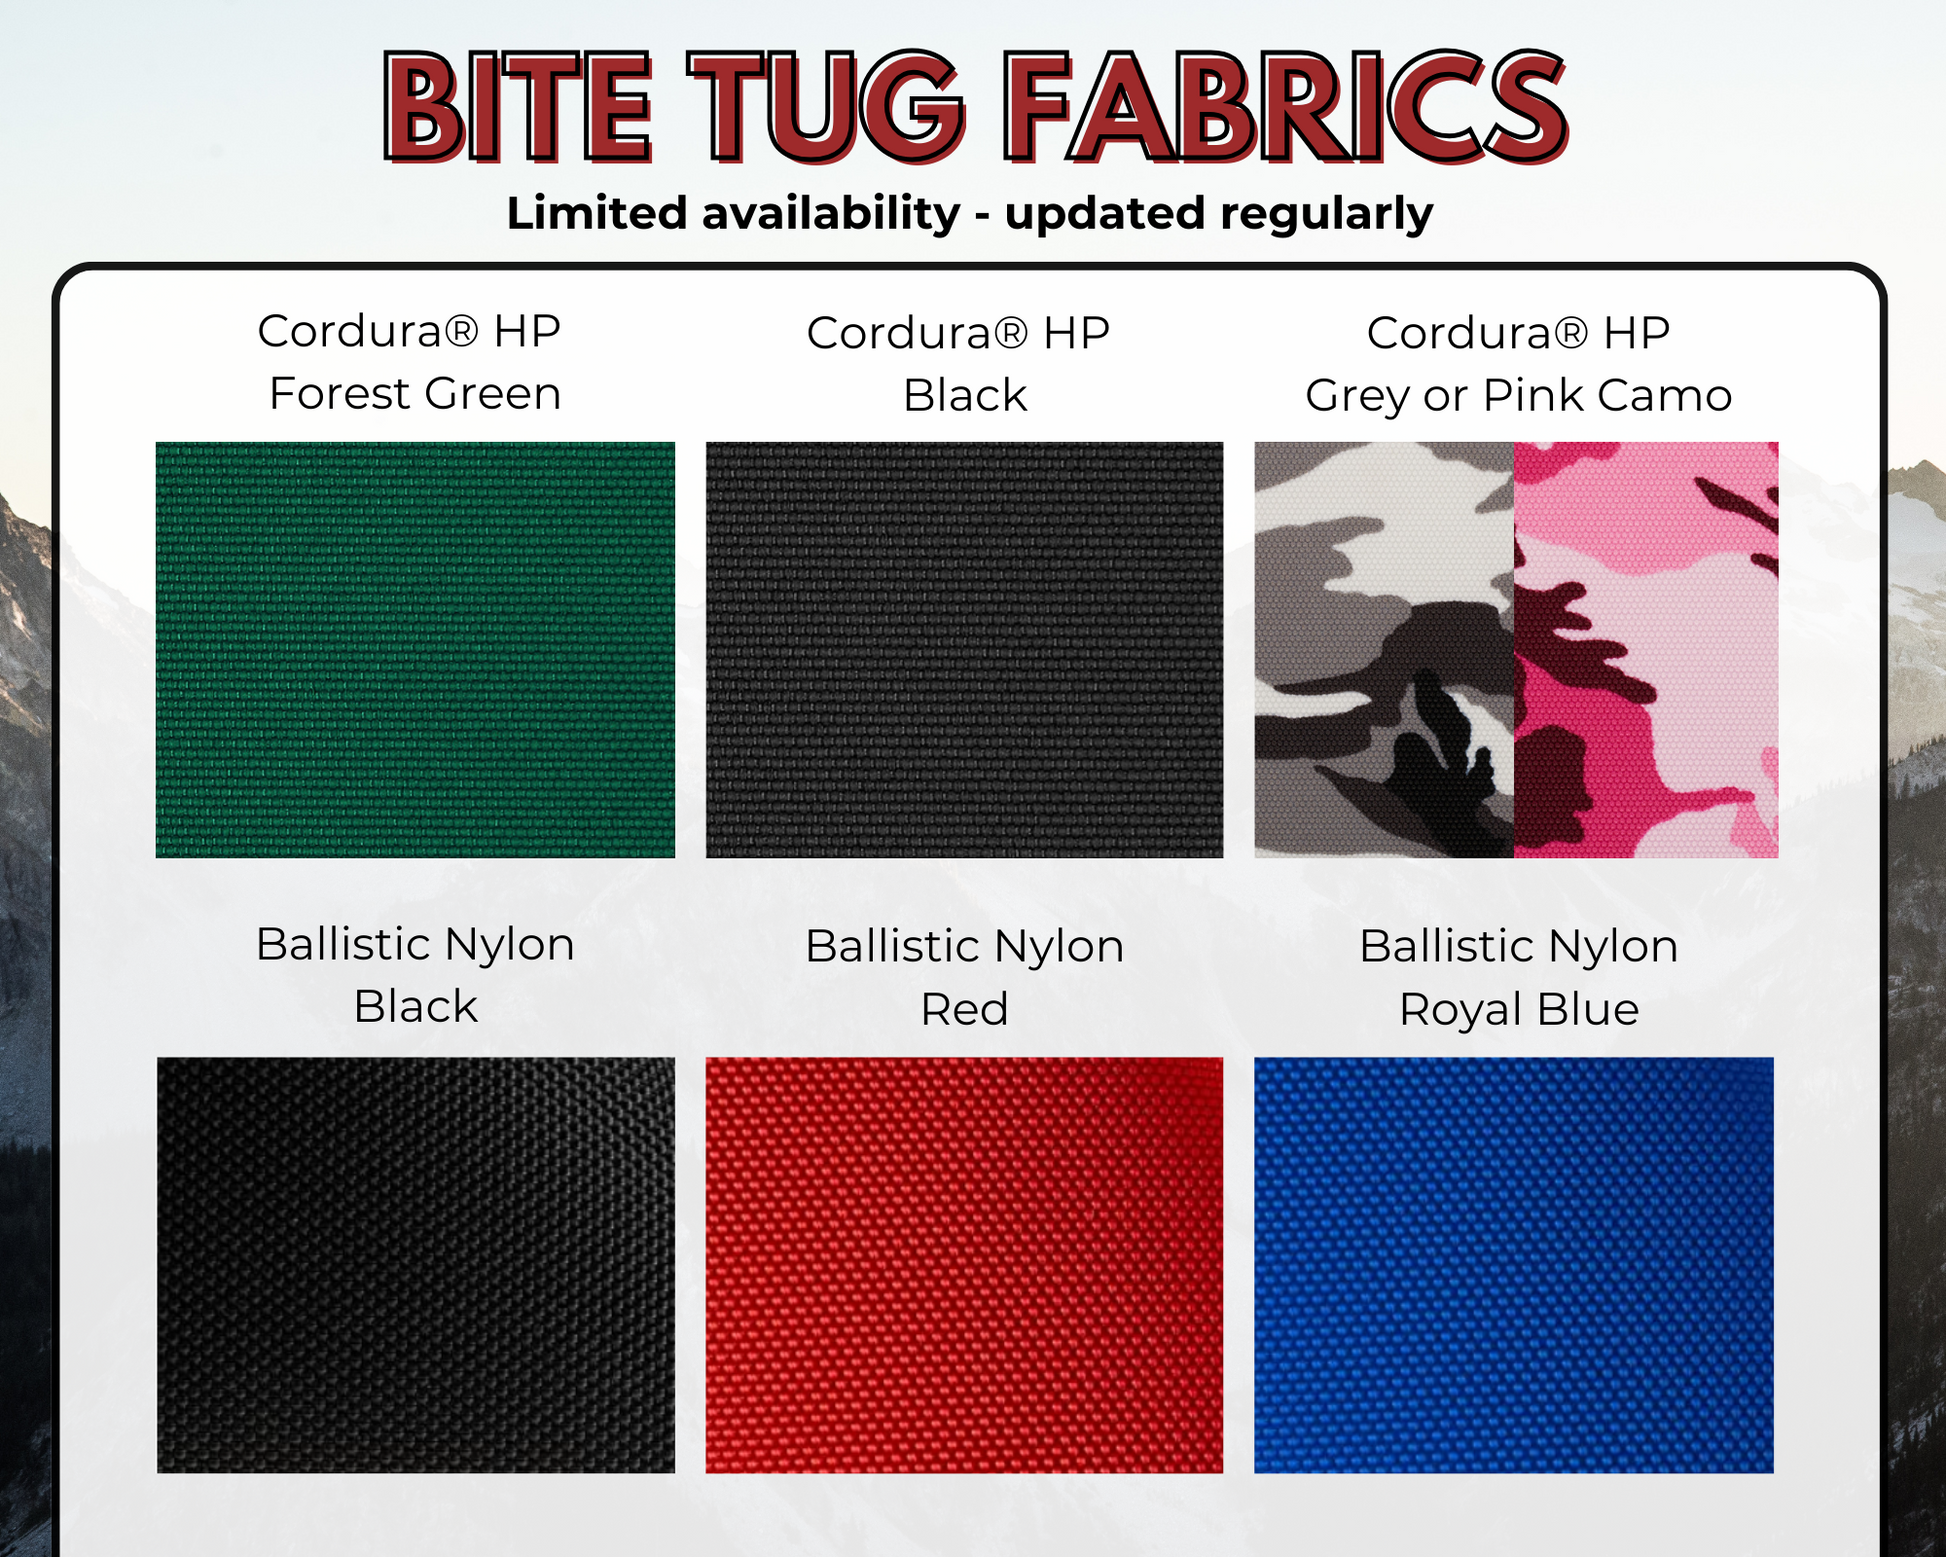 various bite tug fabrics displayed as an infographic.